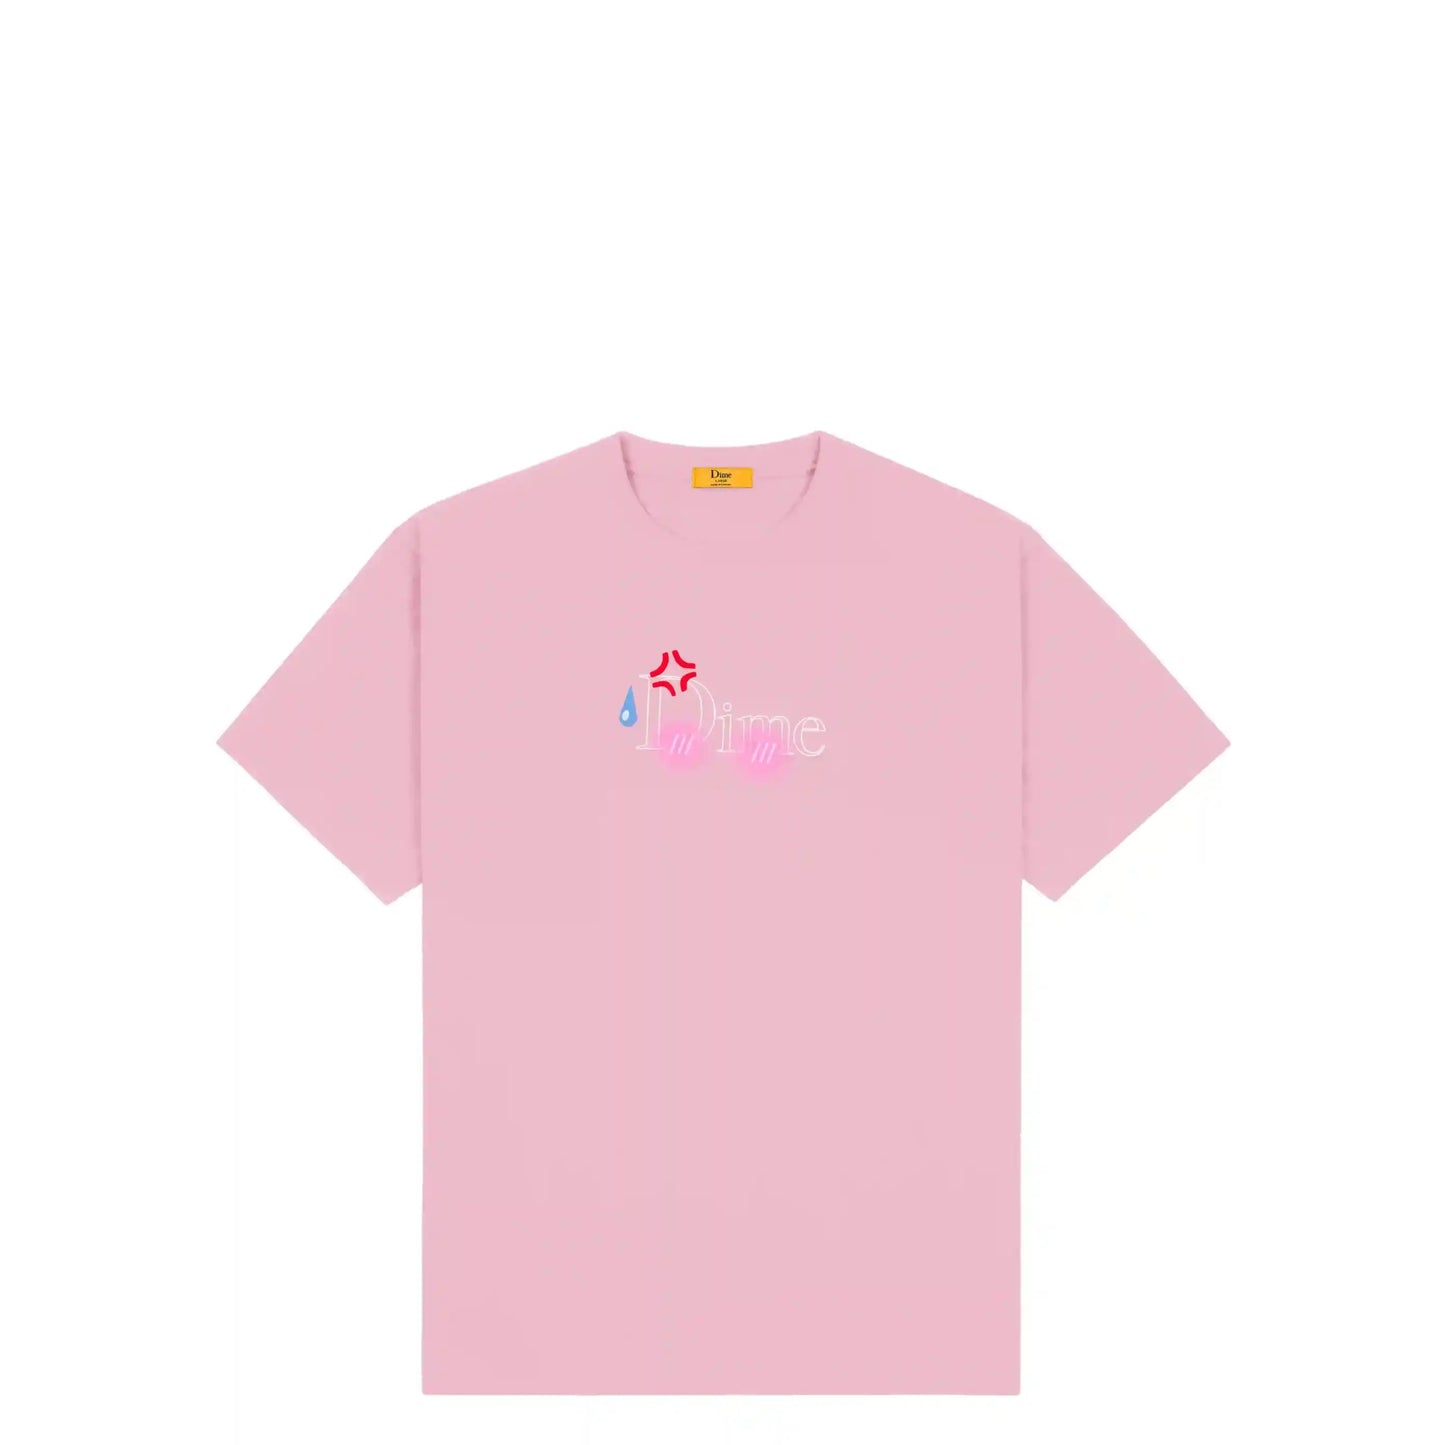 Dime Classic Senpai T-Shirt, lilac - Tiki Room Skateboards - 1